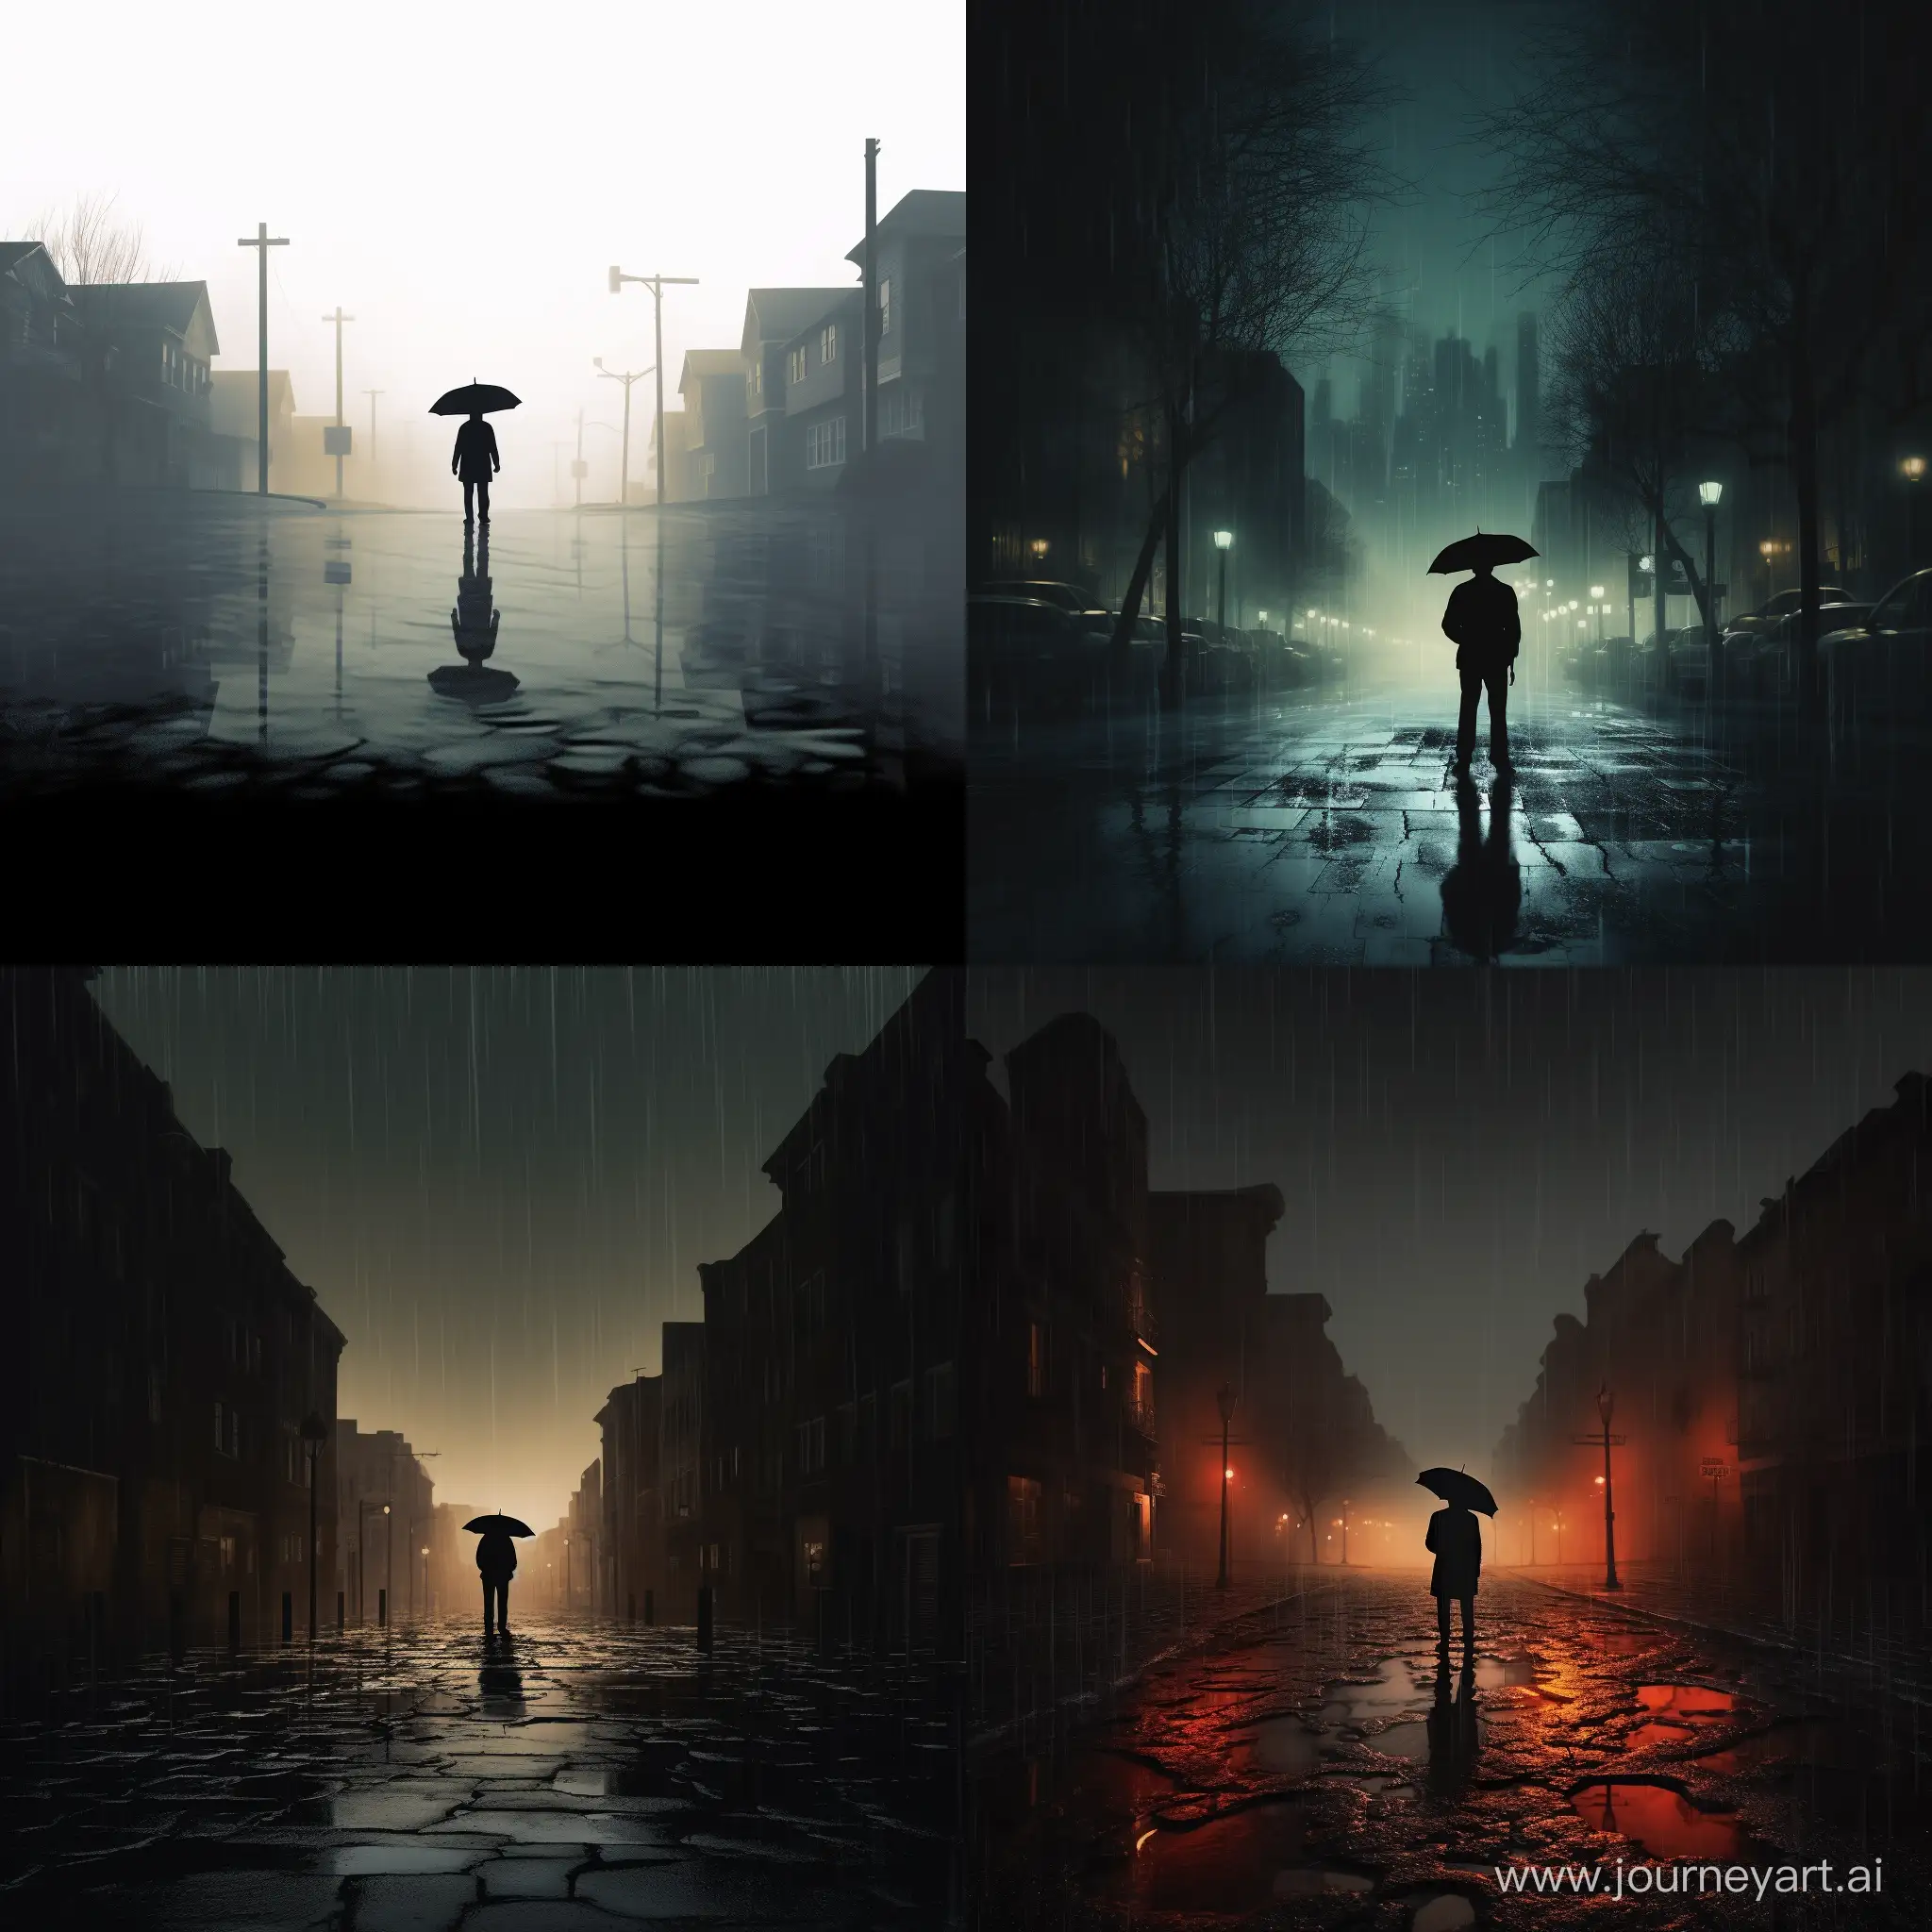 Lonely-Man-Embracing-Solitude-with-Umbrella-in-Rainy-Street-Scene